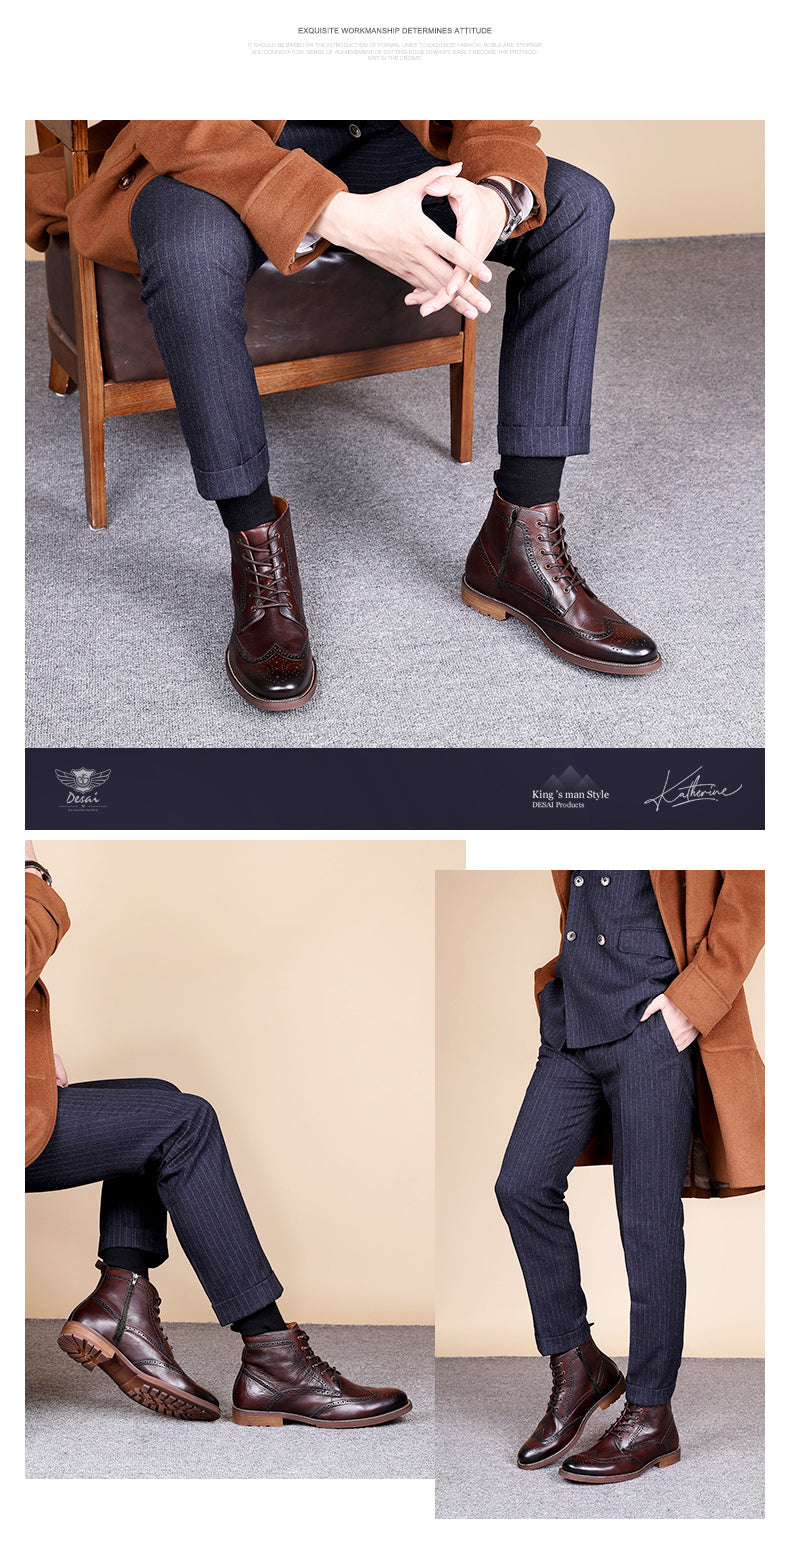 DS816301HL DESAI Spring NEW Men Boots Big Vintage Brogue College Style Men Shoes Casual Fashion Lace-up Boots